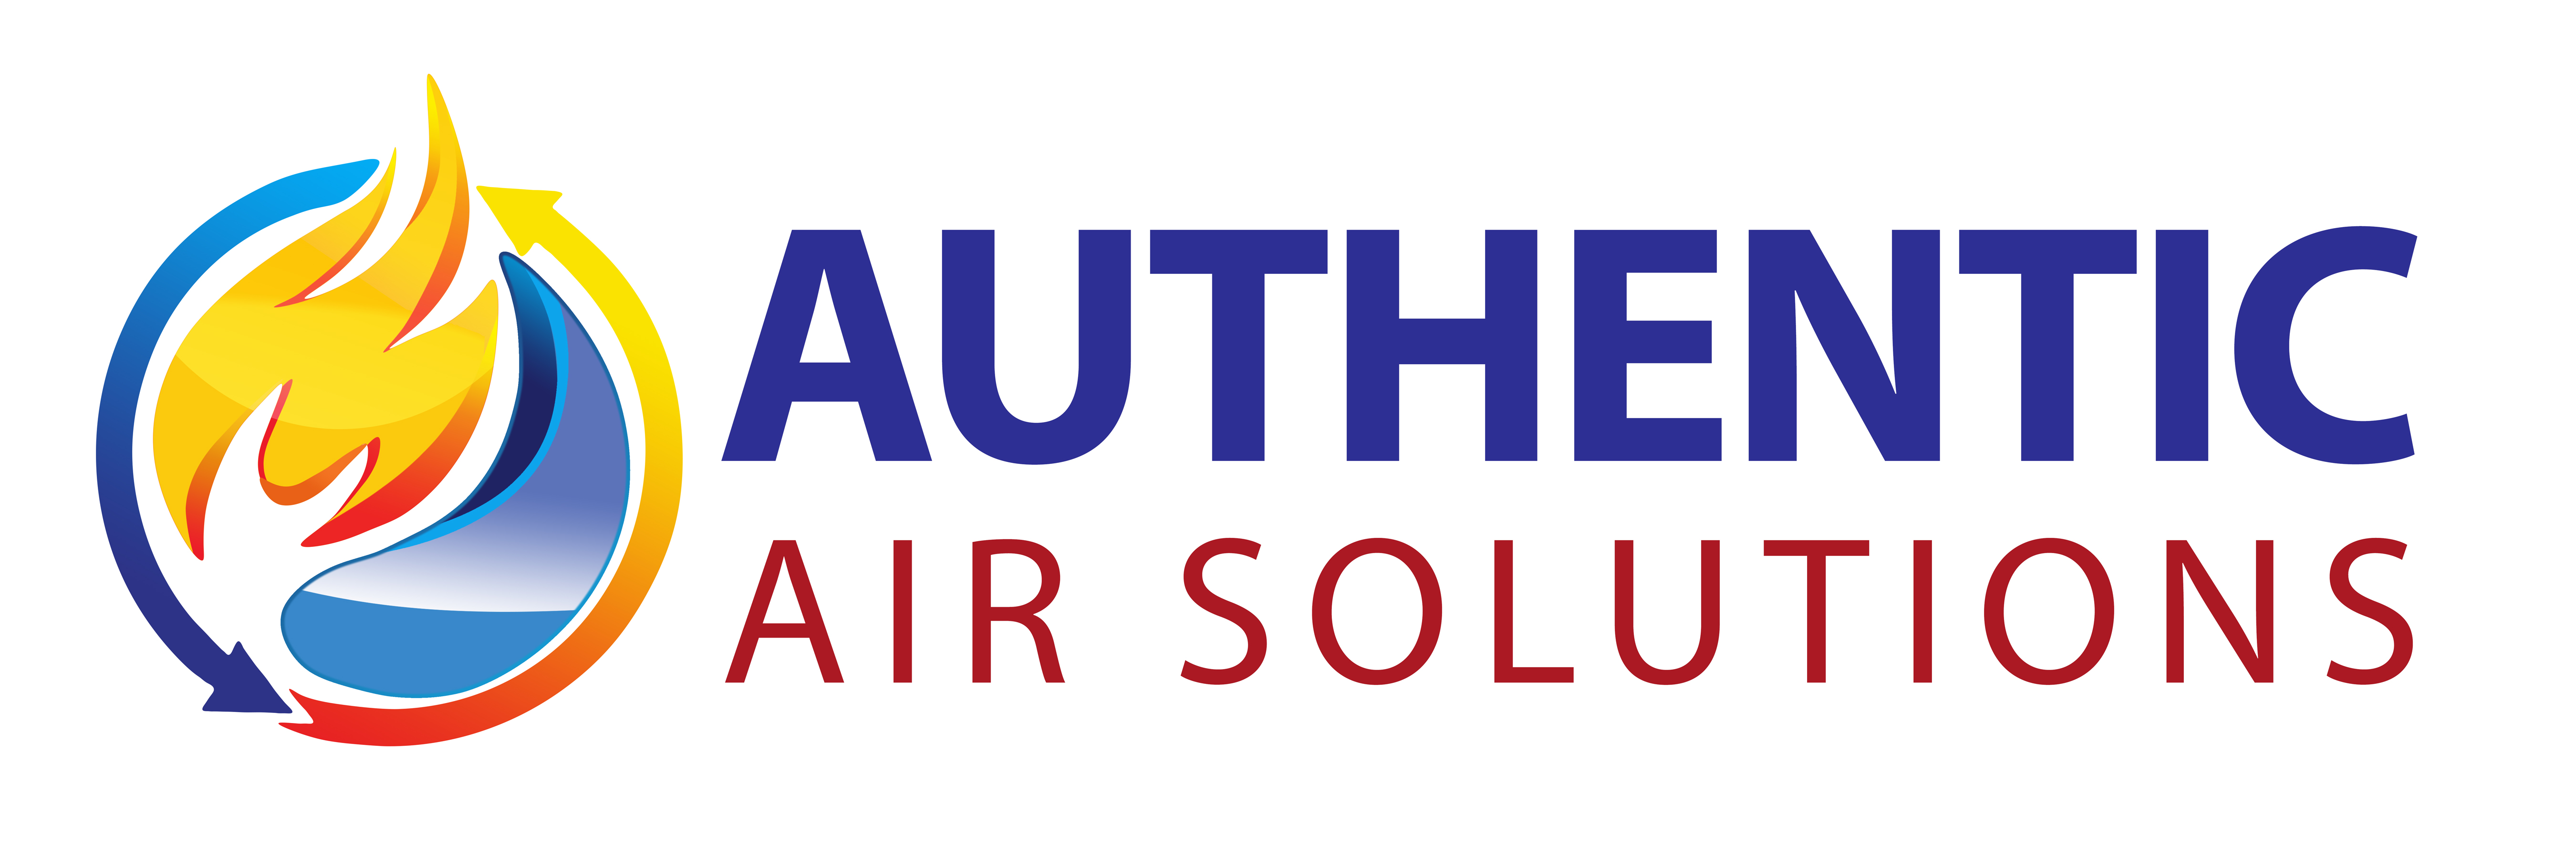 Authentic Air Solutions, LLC Logo